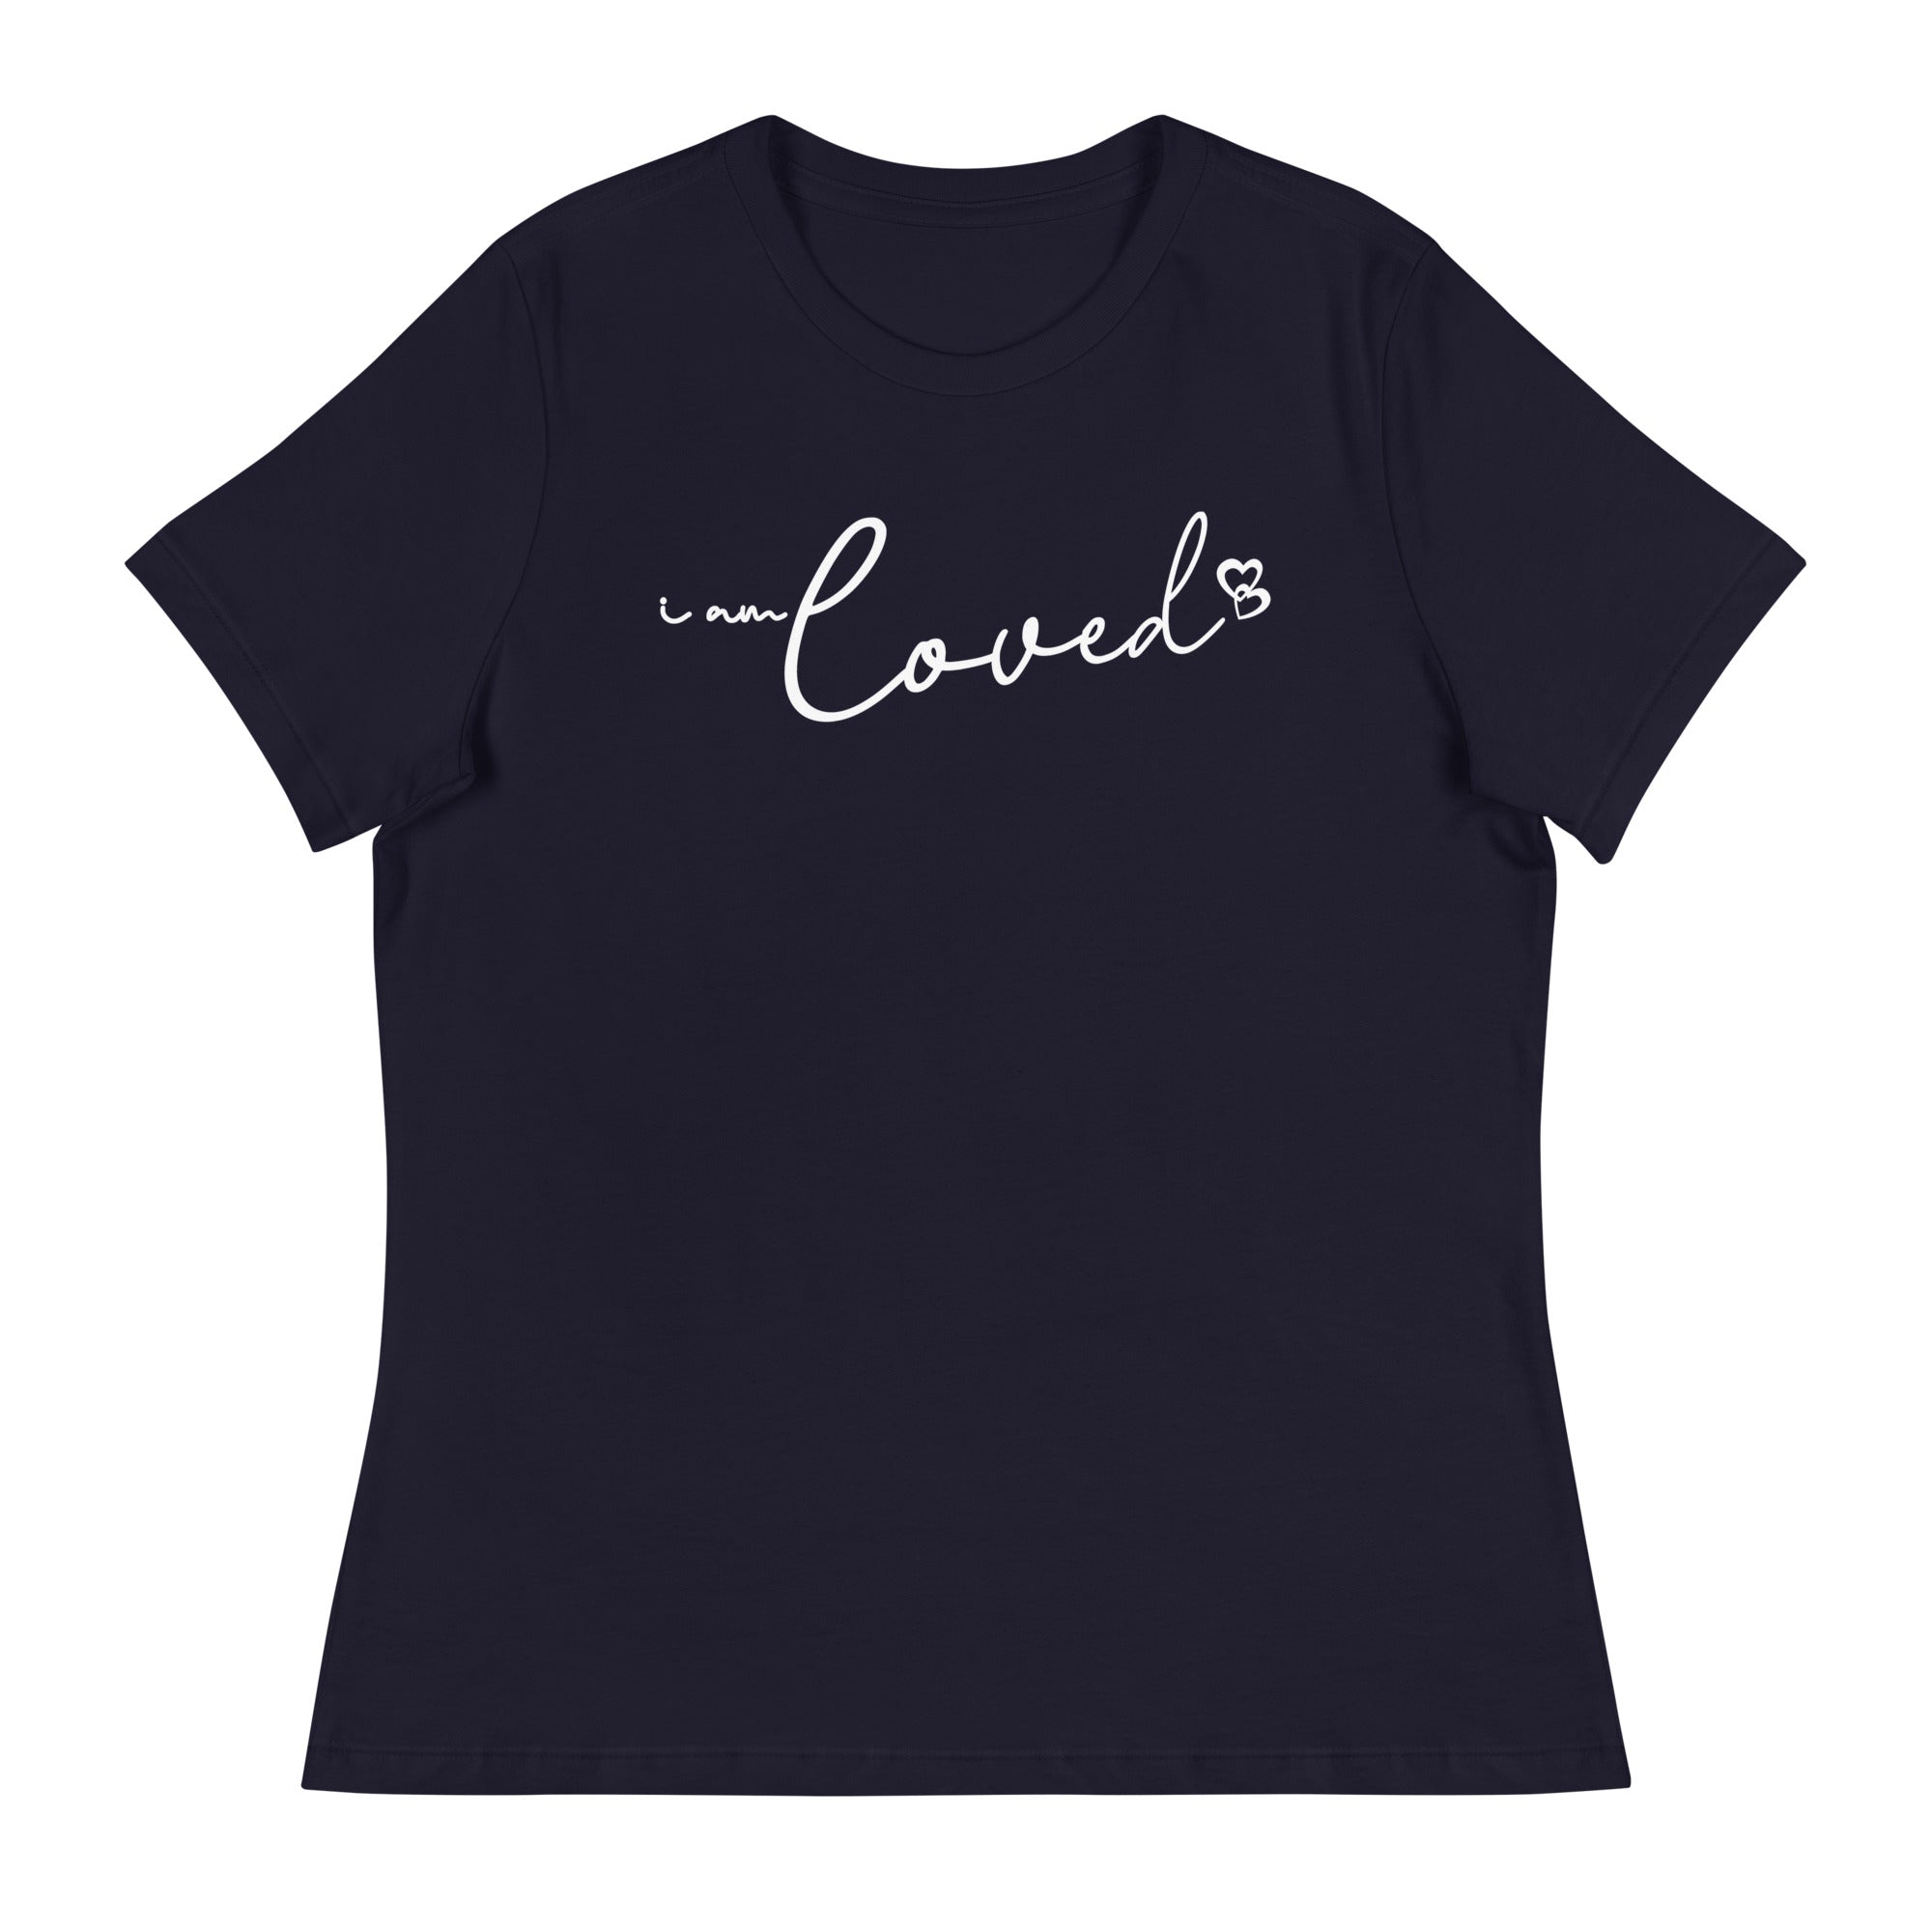 I am Loved ~ Women's Graphic T-Shirt, Butterfly Word Art Short Sleeve Top